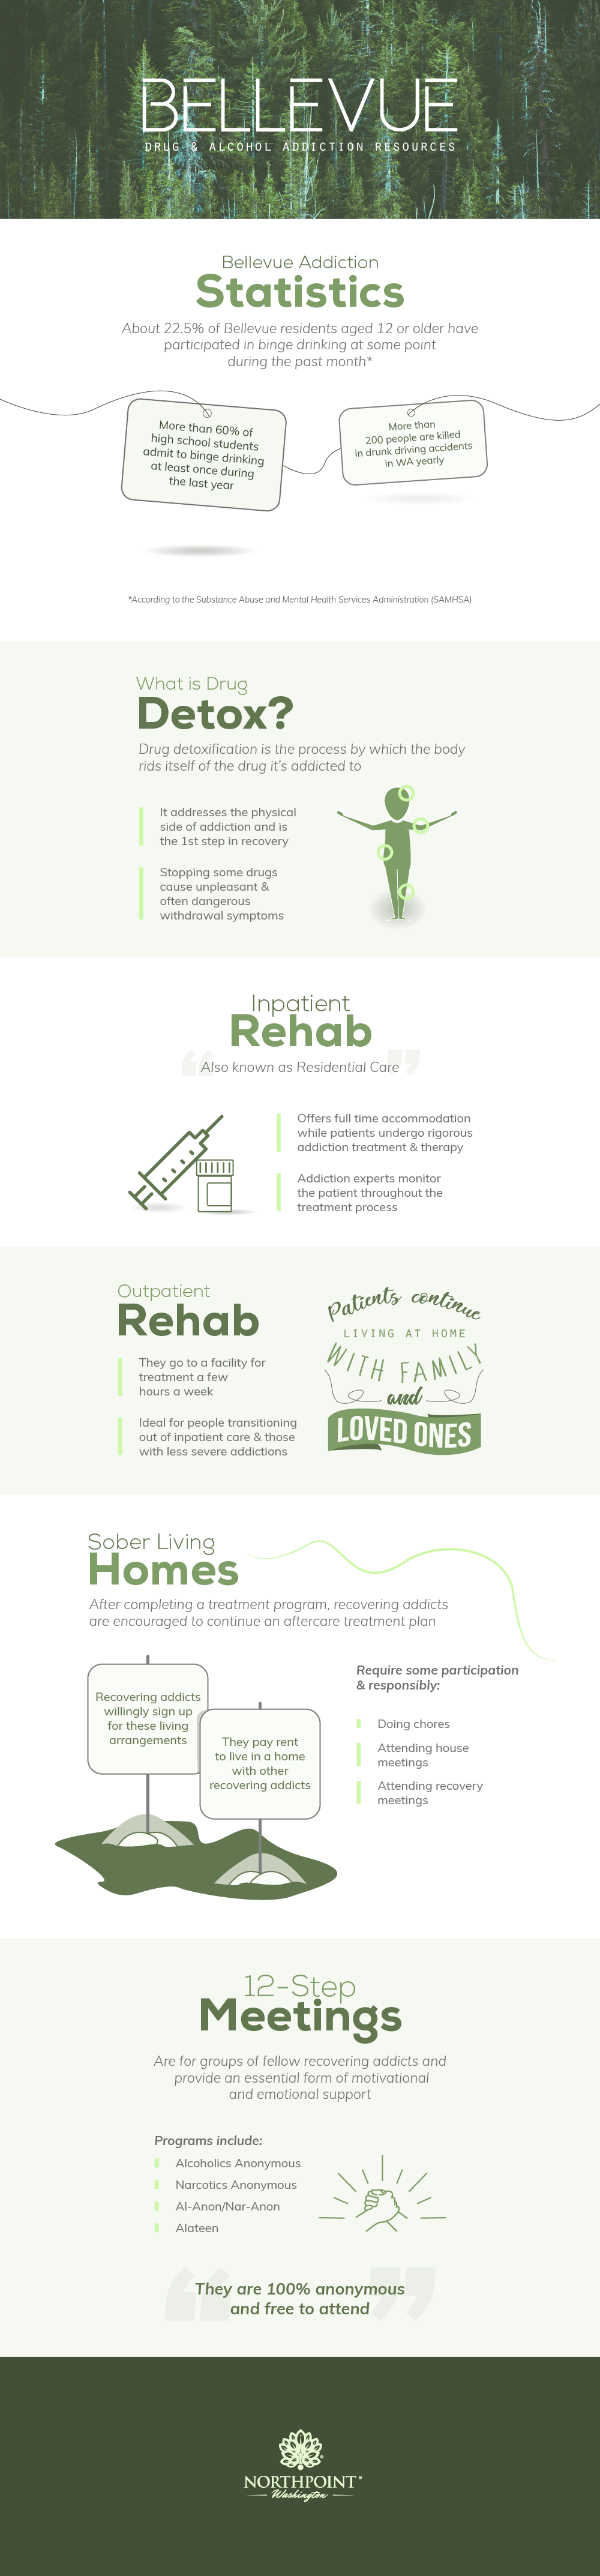 Bellevue, Washington Addiction Resources Full Infographic